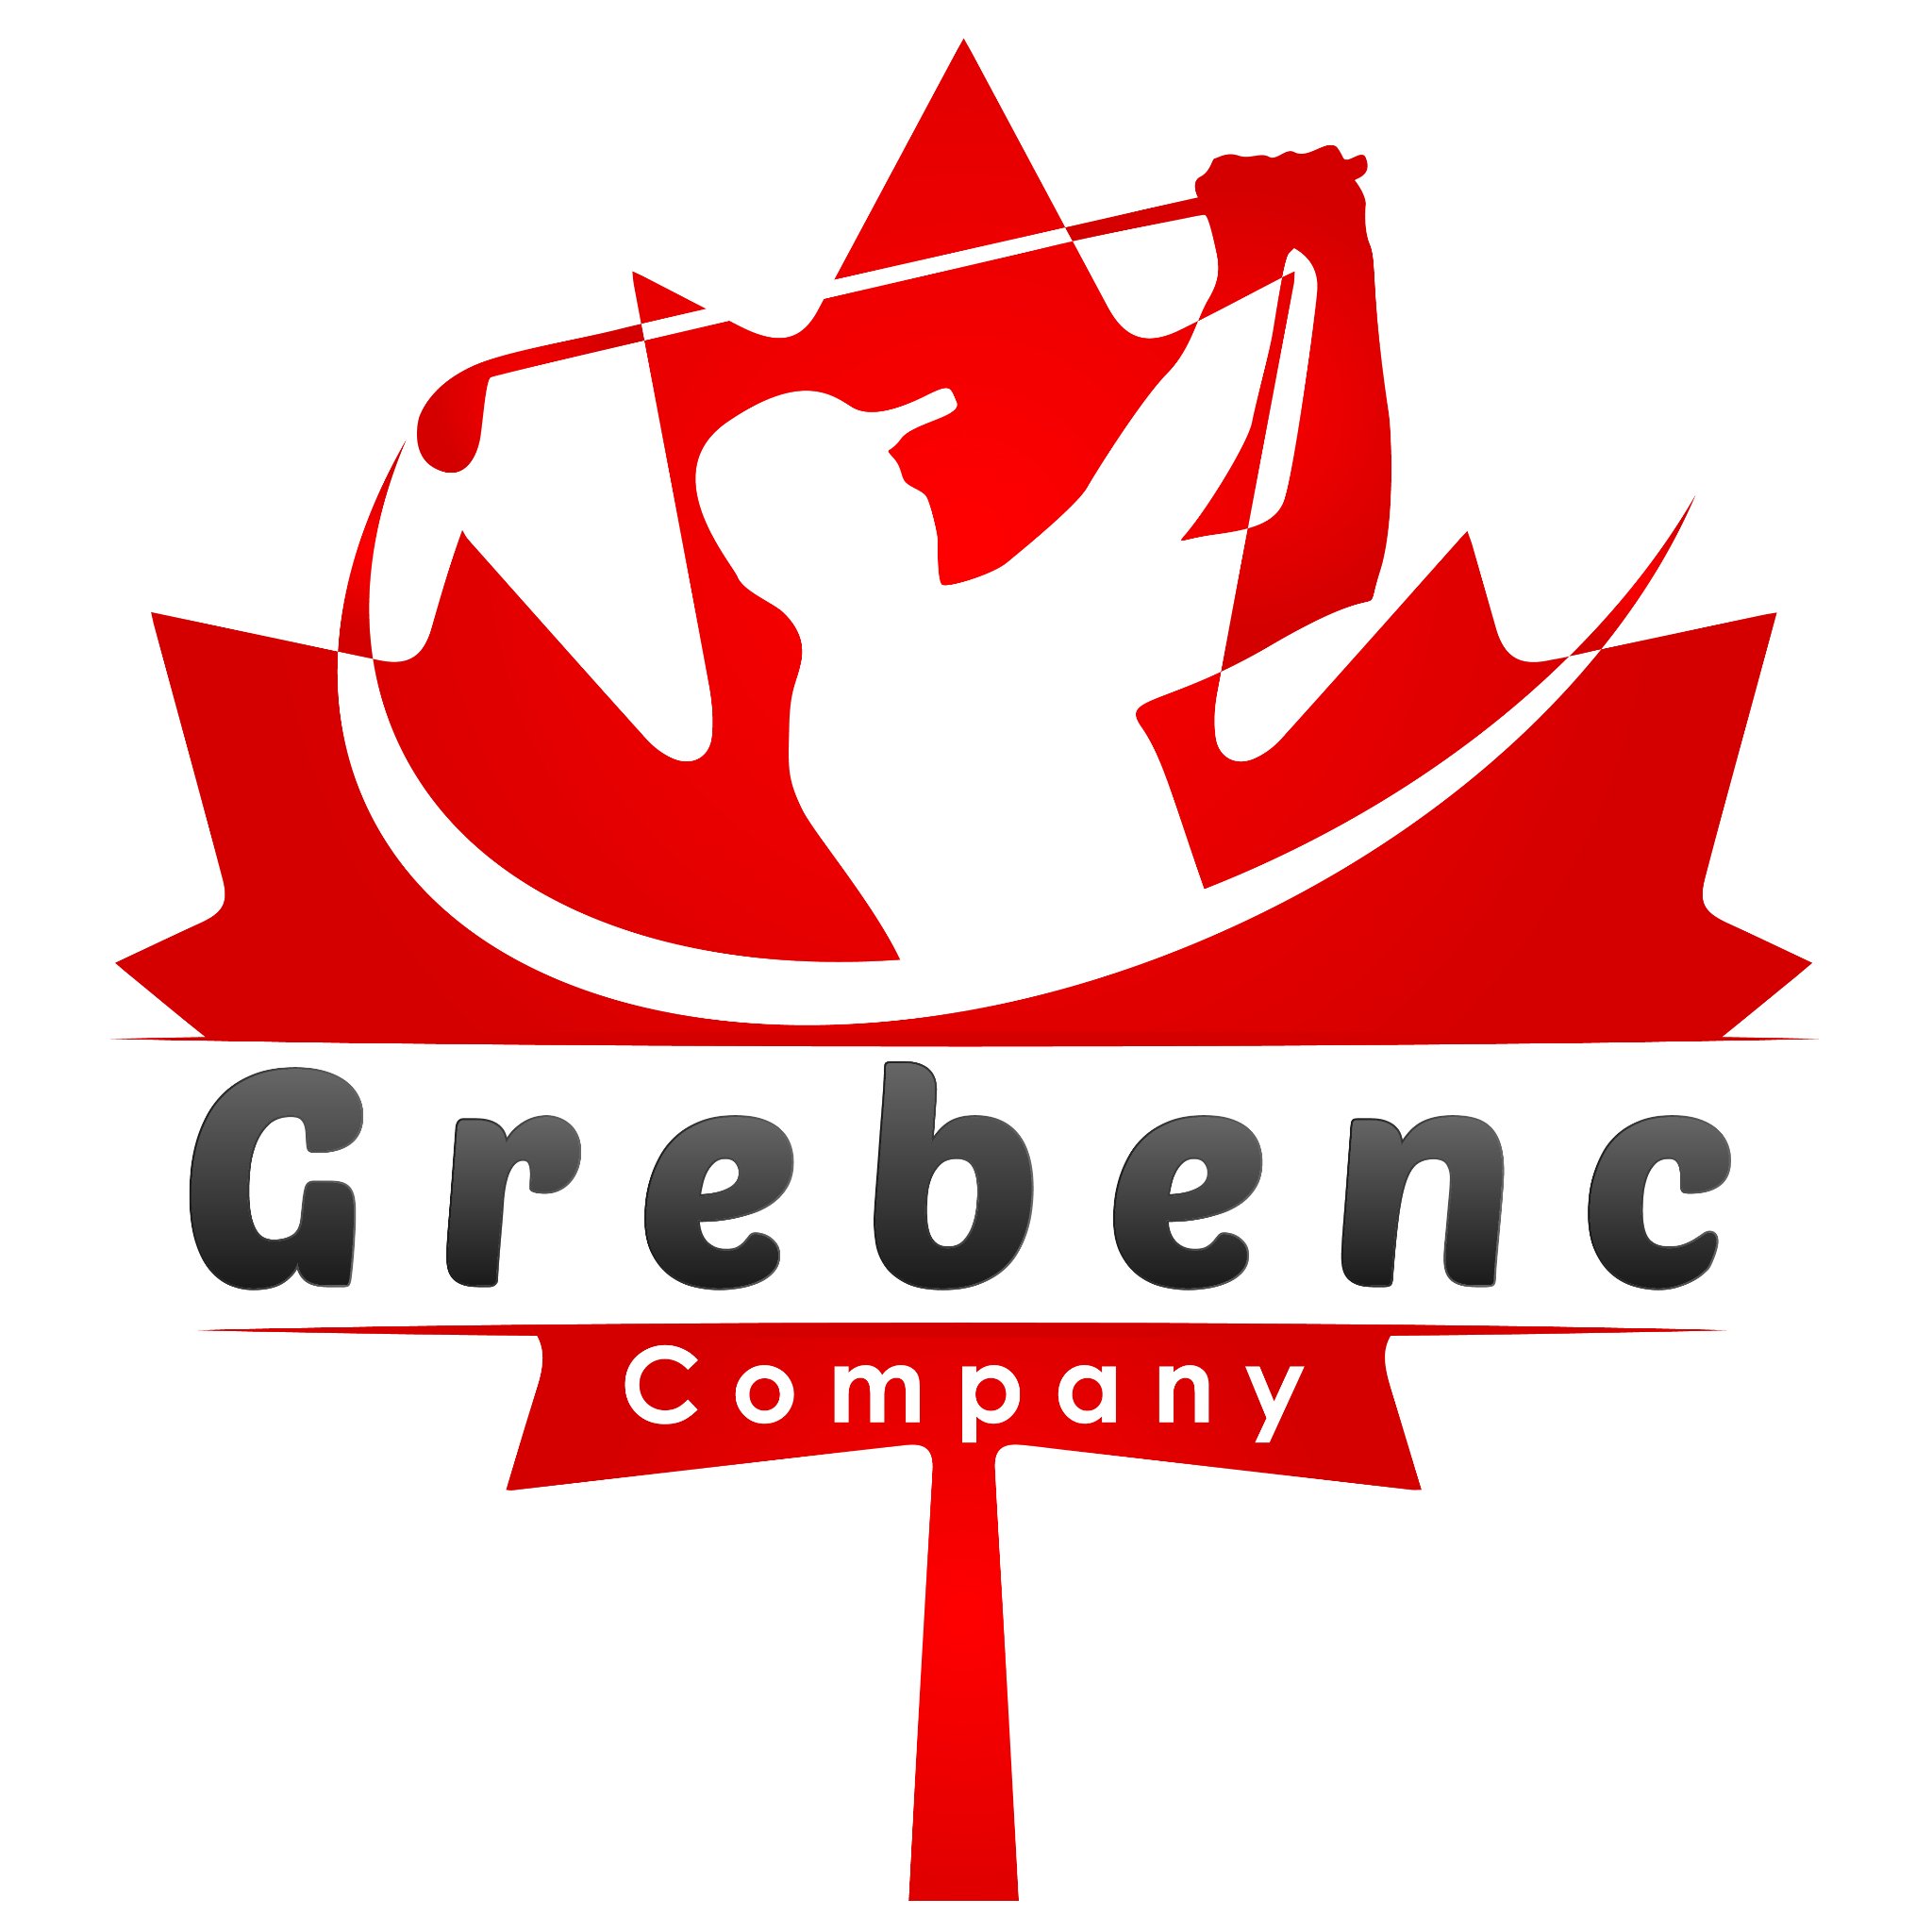 Grebenc Company